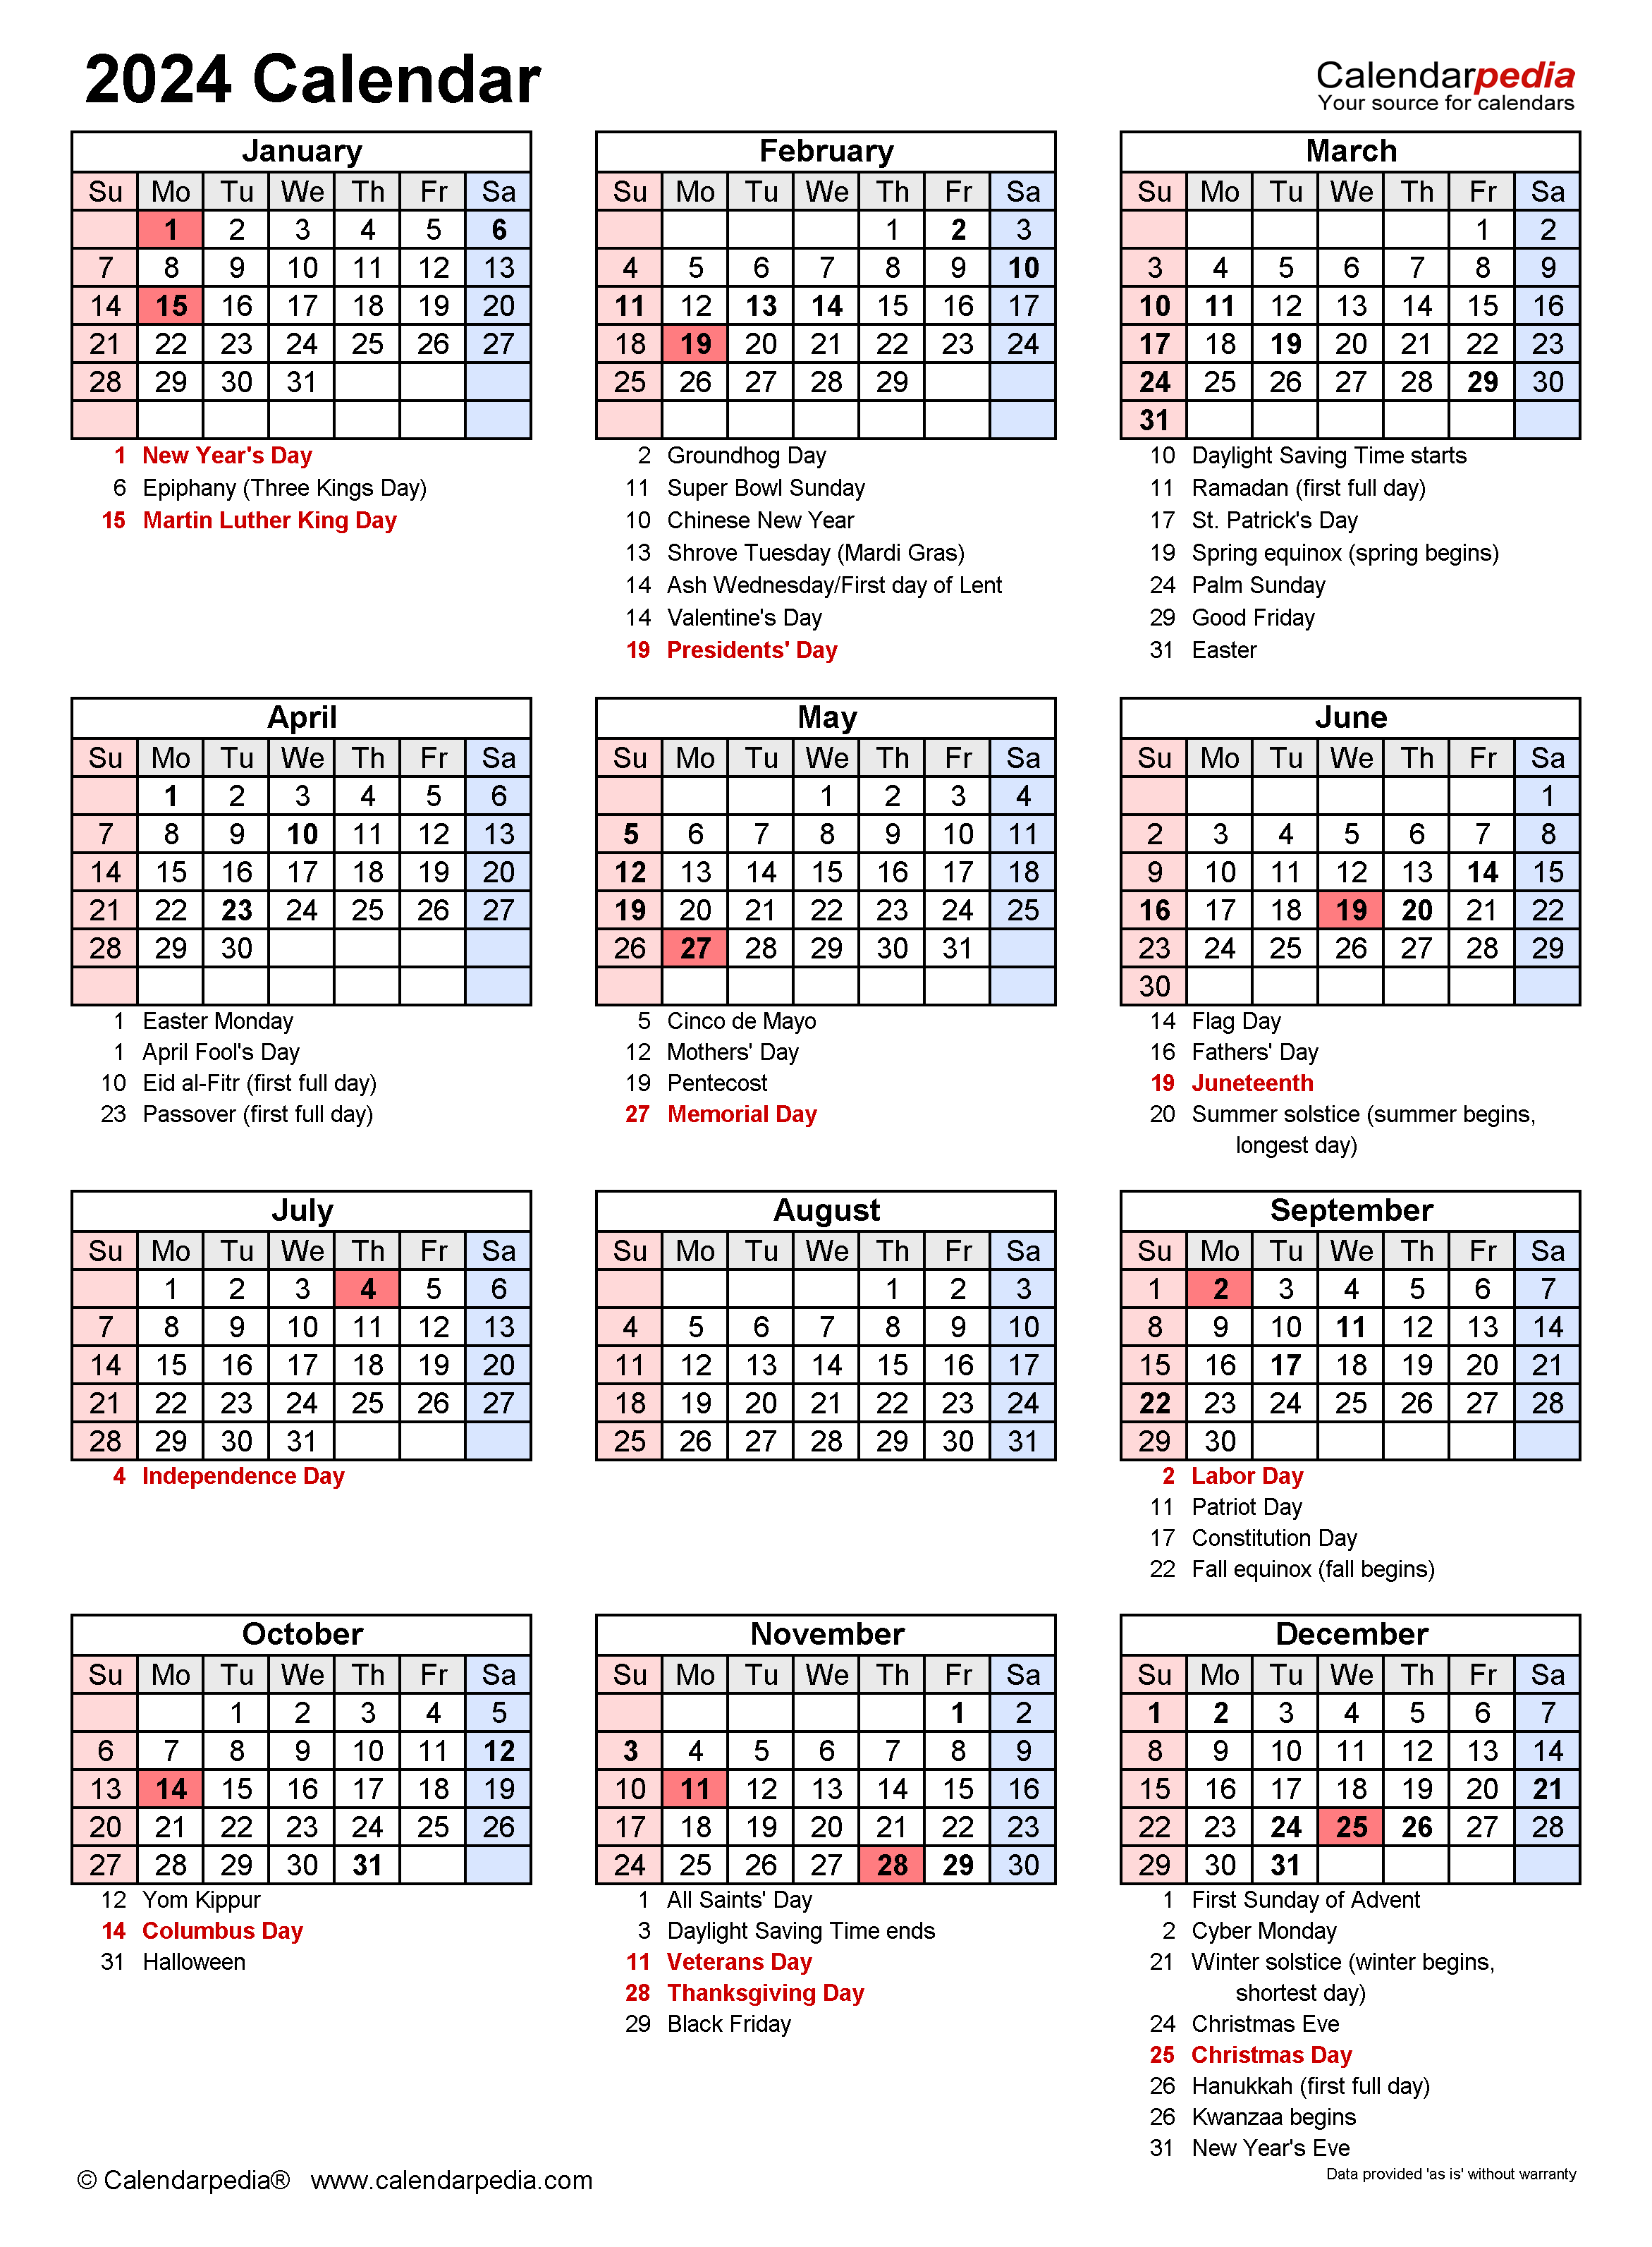 2024 Calendar - Free Printable Excel Templates - Calendarpedia for Free Printable Calendar 2024 Date And Time